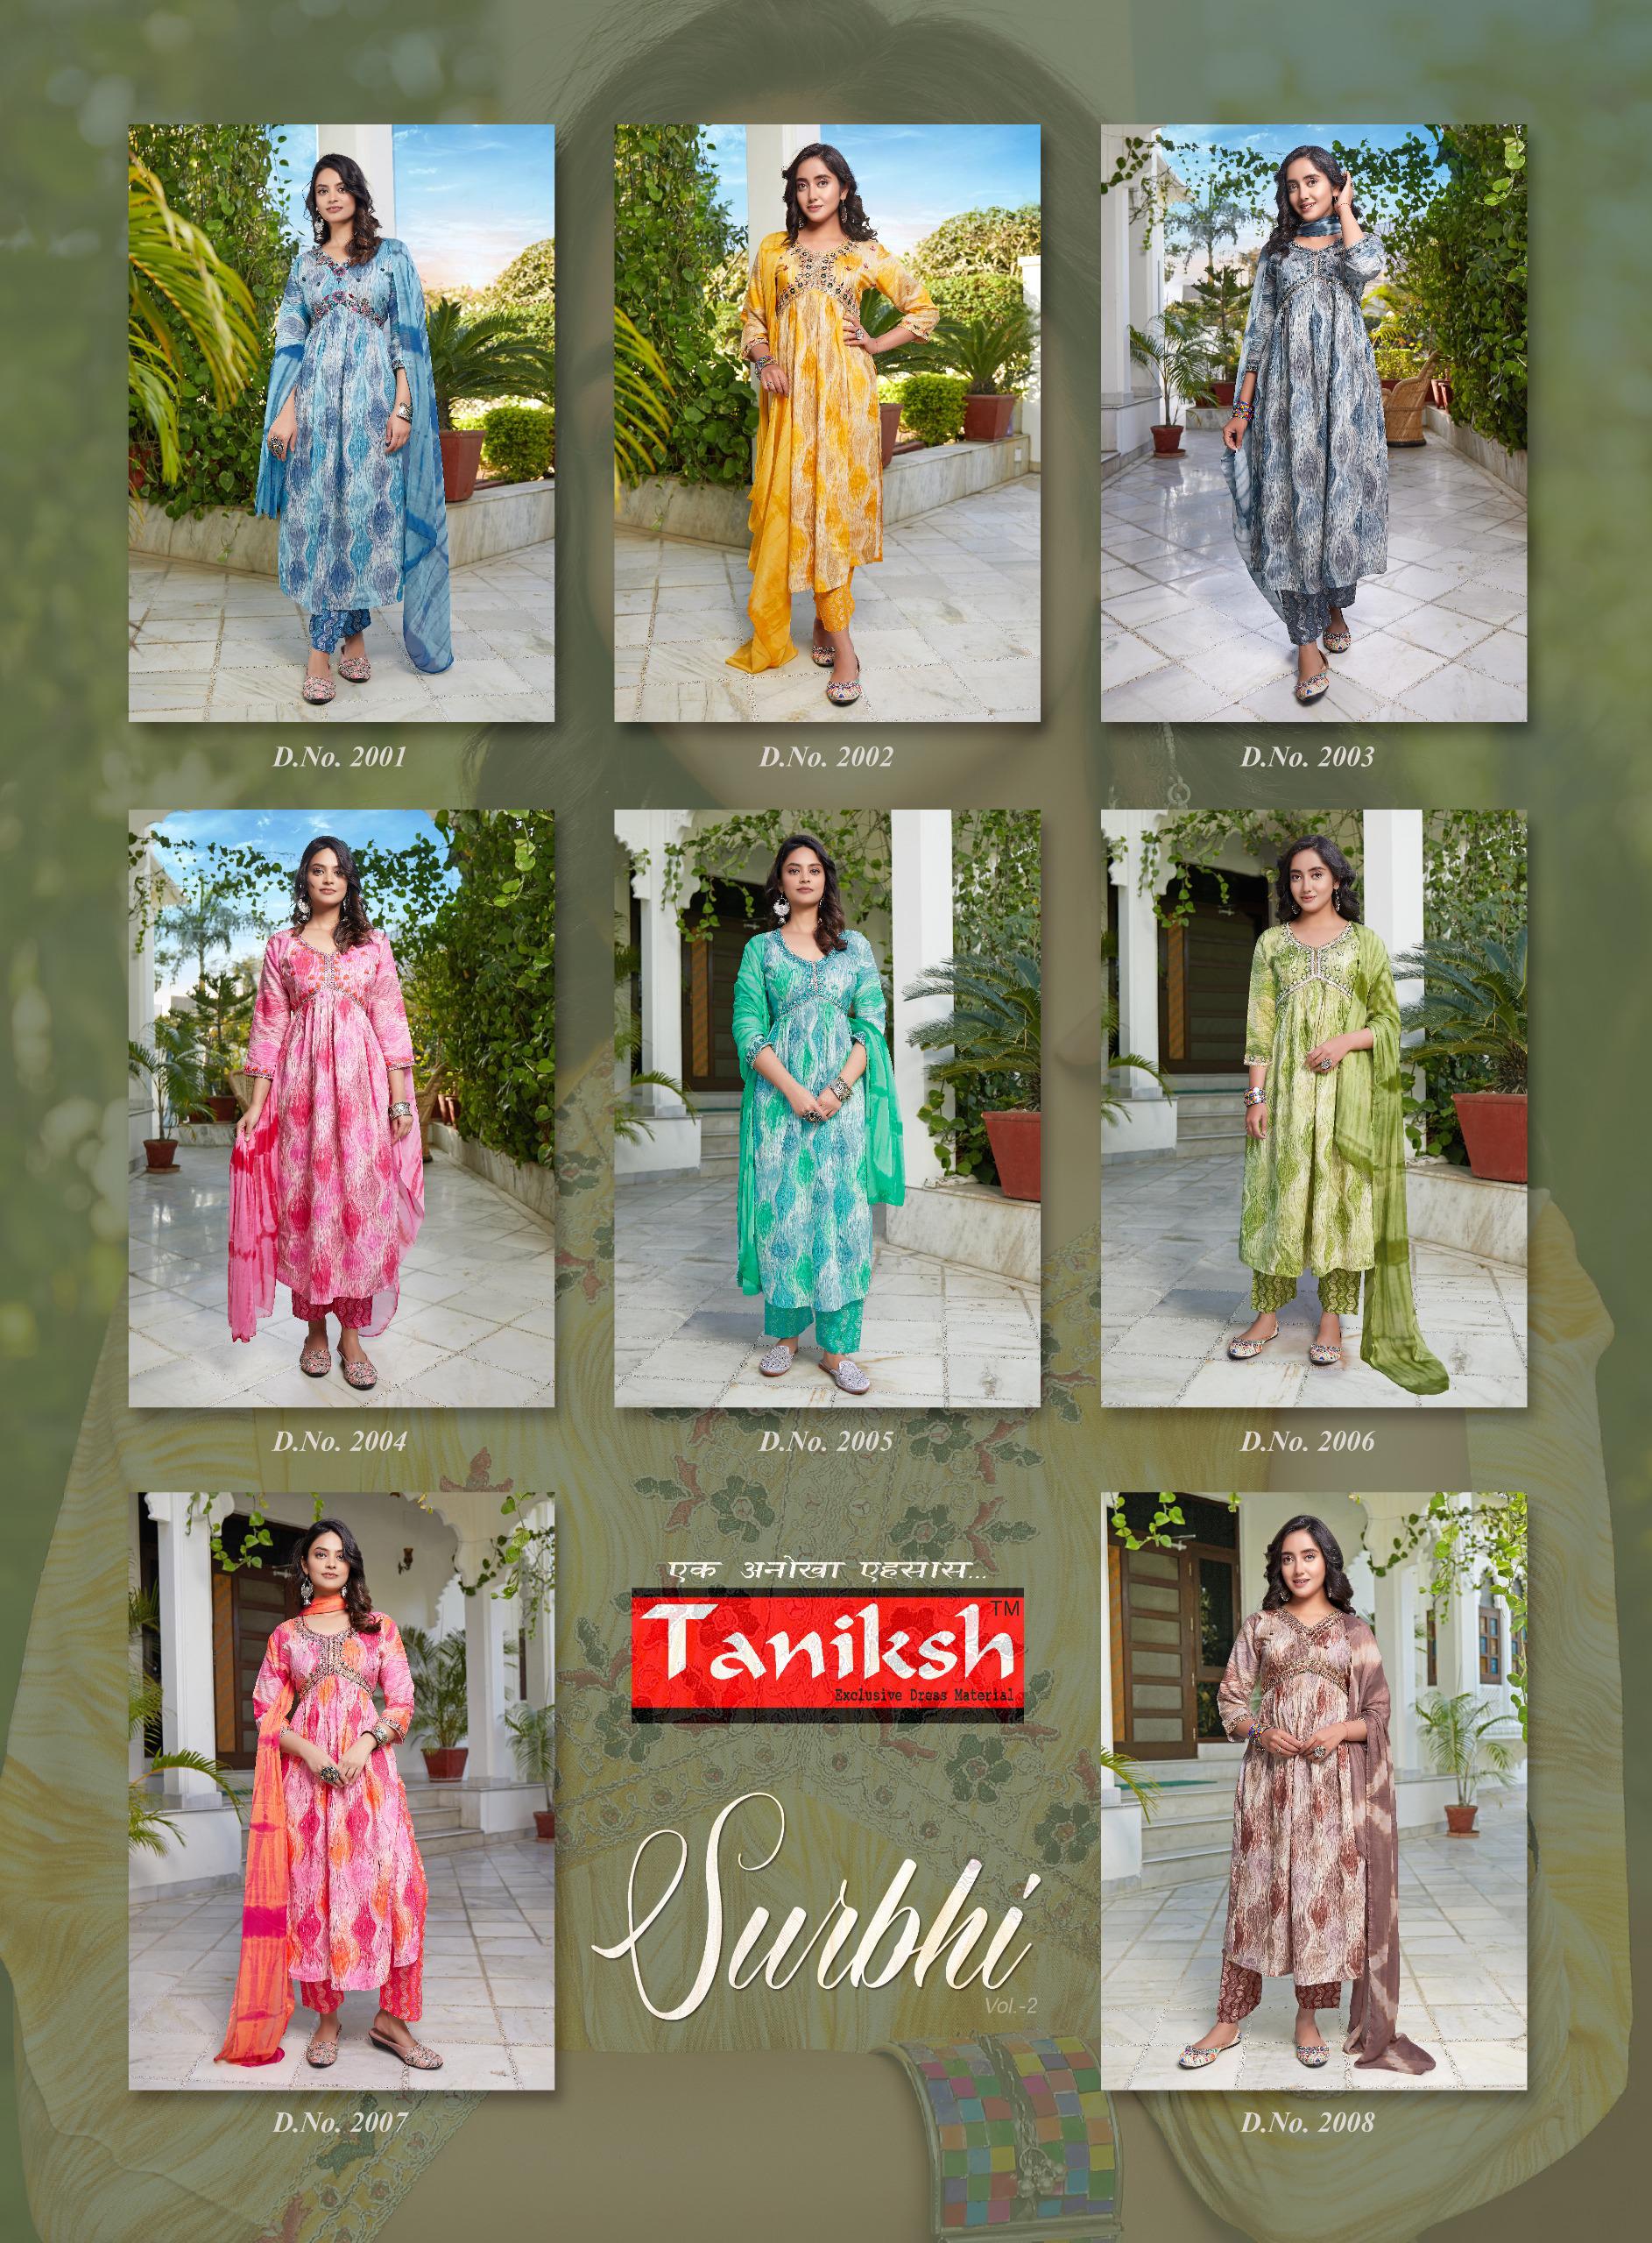 Tanishk Surbhi Vol 2 collection 9